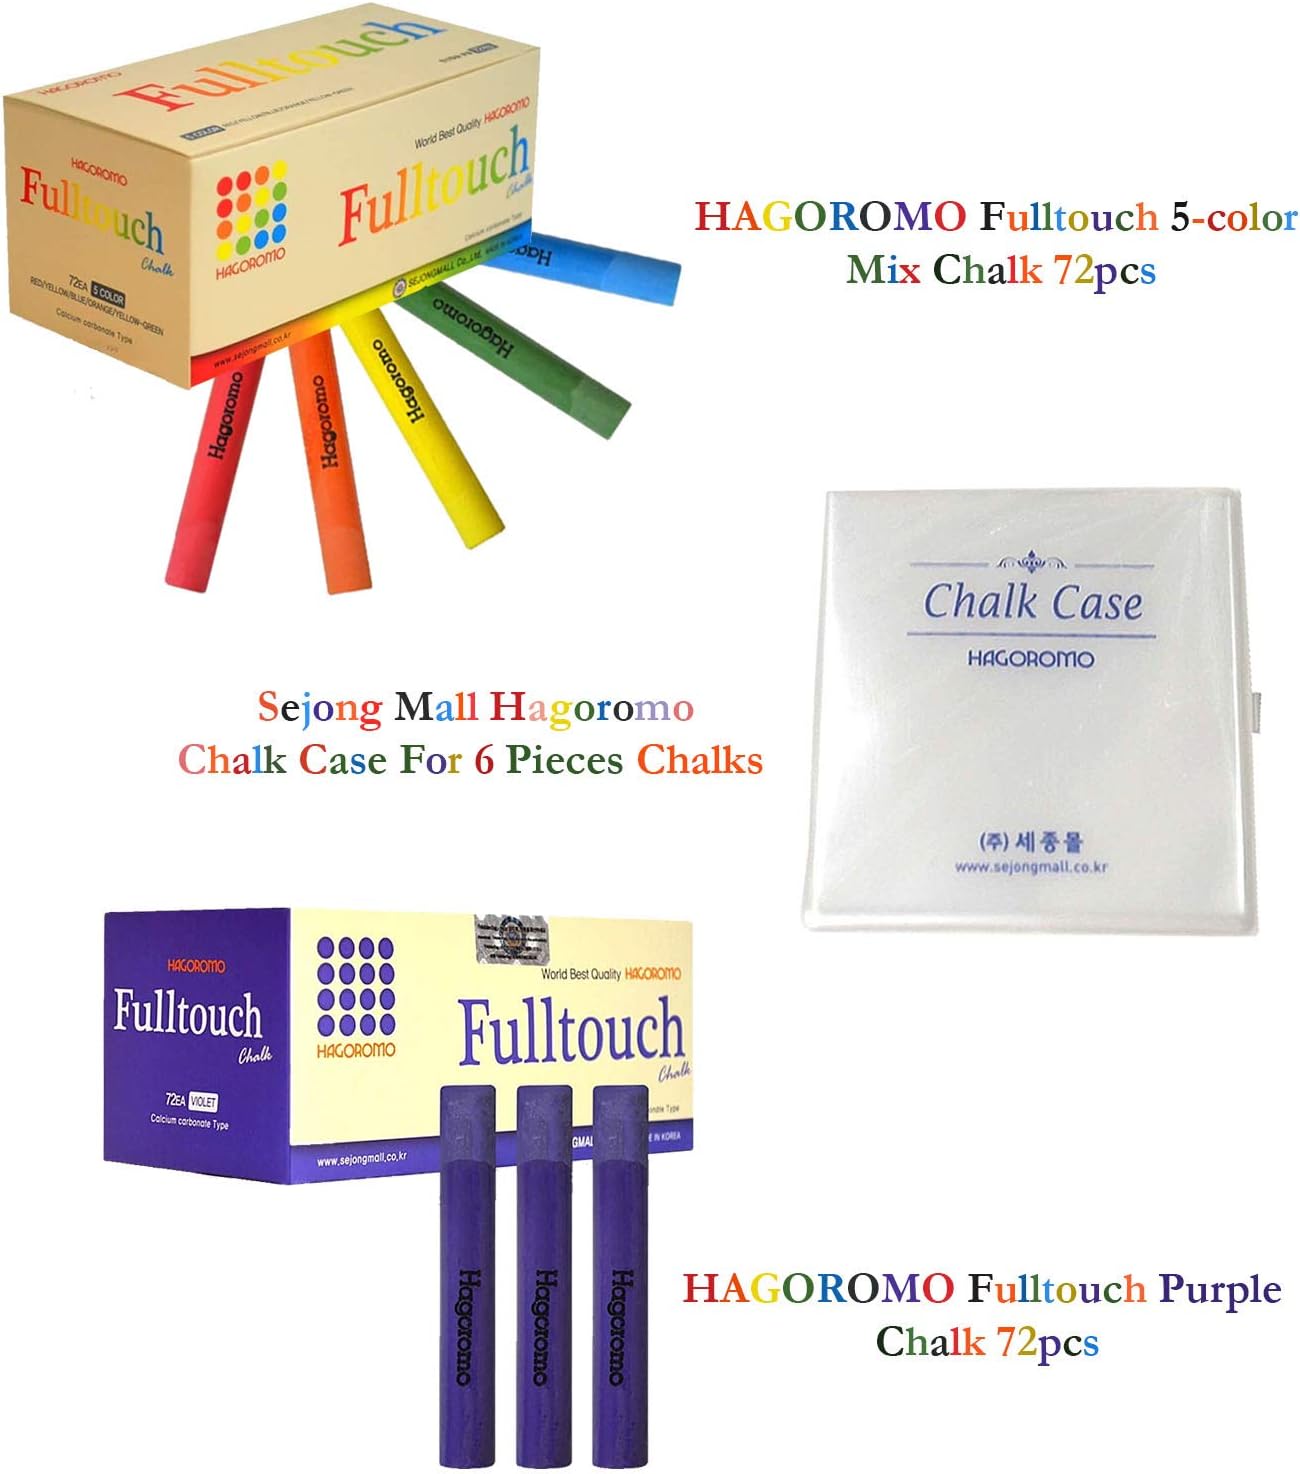 Hagoromo Fulltouch 5-Color Mix Chalk 72pcs Fulltouch Chalk 72pcs + Chalk Case